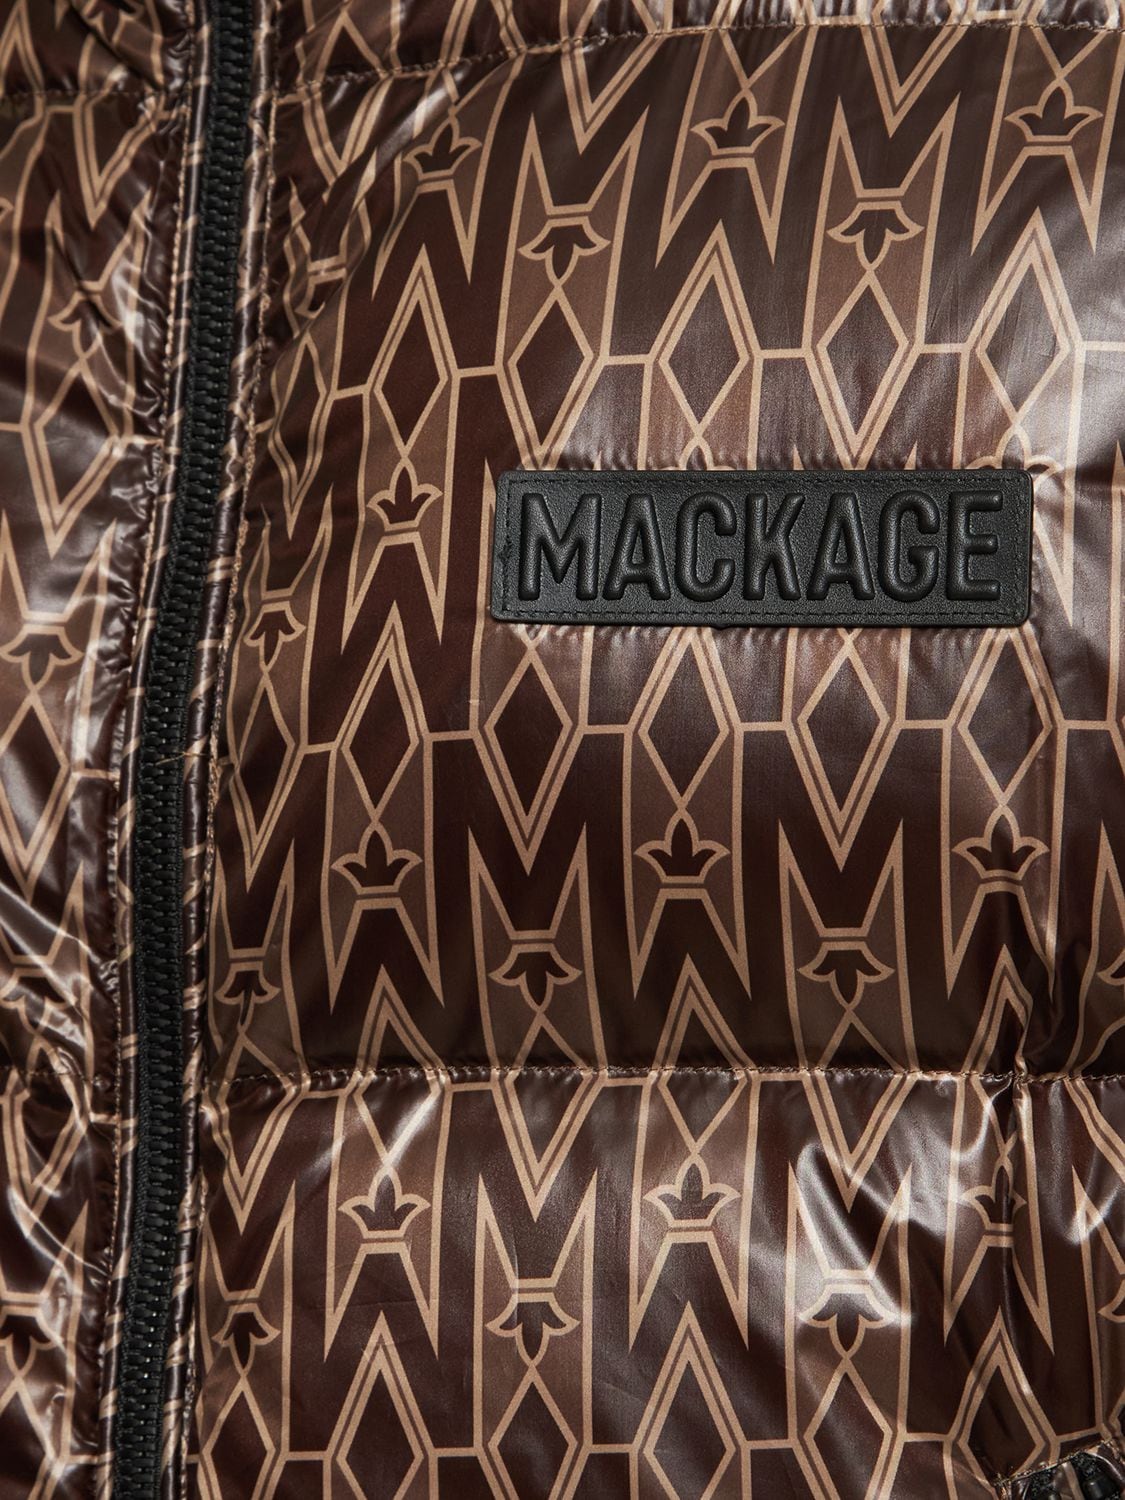 Mackage Men's Kane Monogram Recycled Down Vest